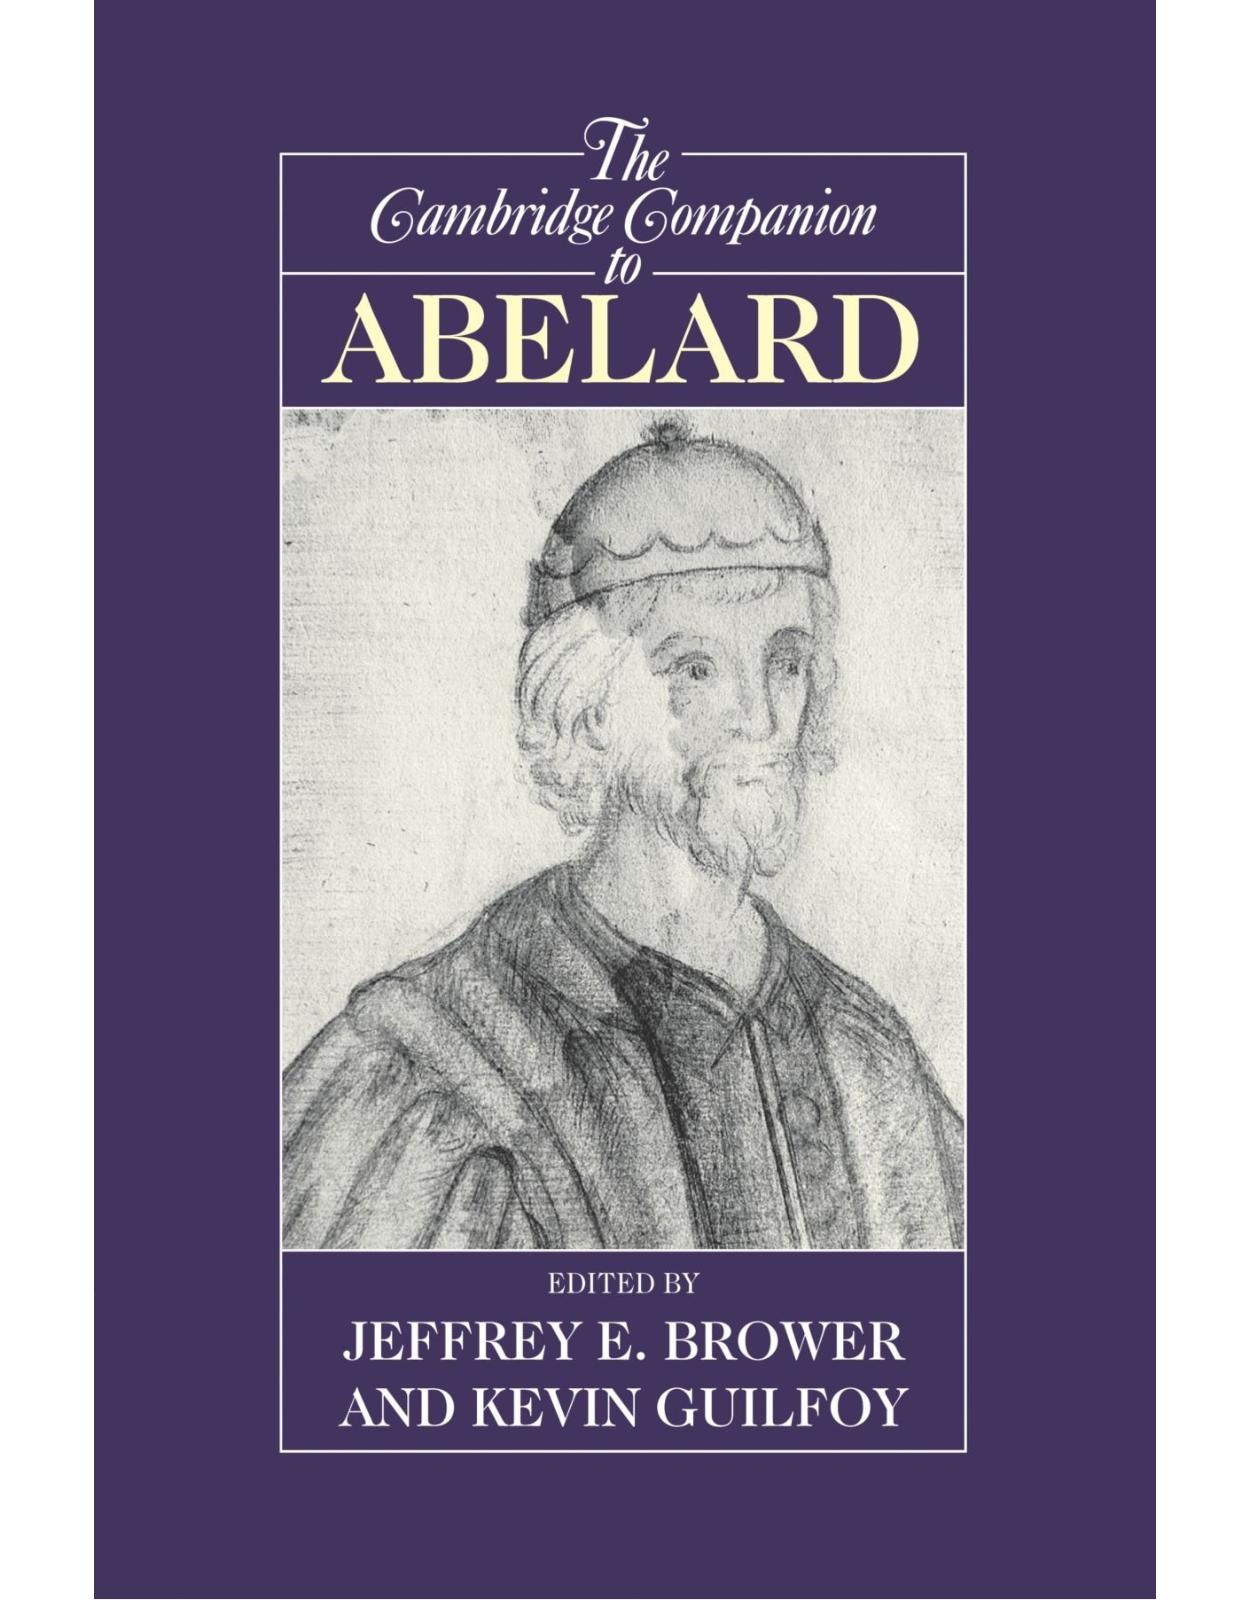 The Cambridge Companion to Abelard (Cambridge Companions to Philosophy)